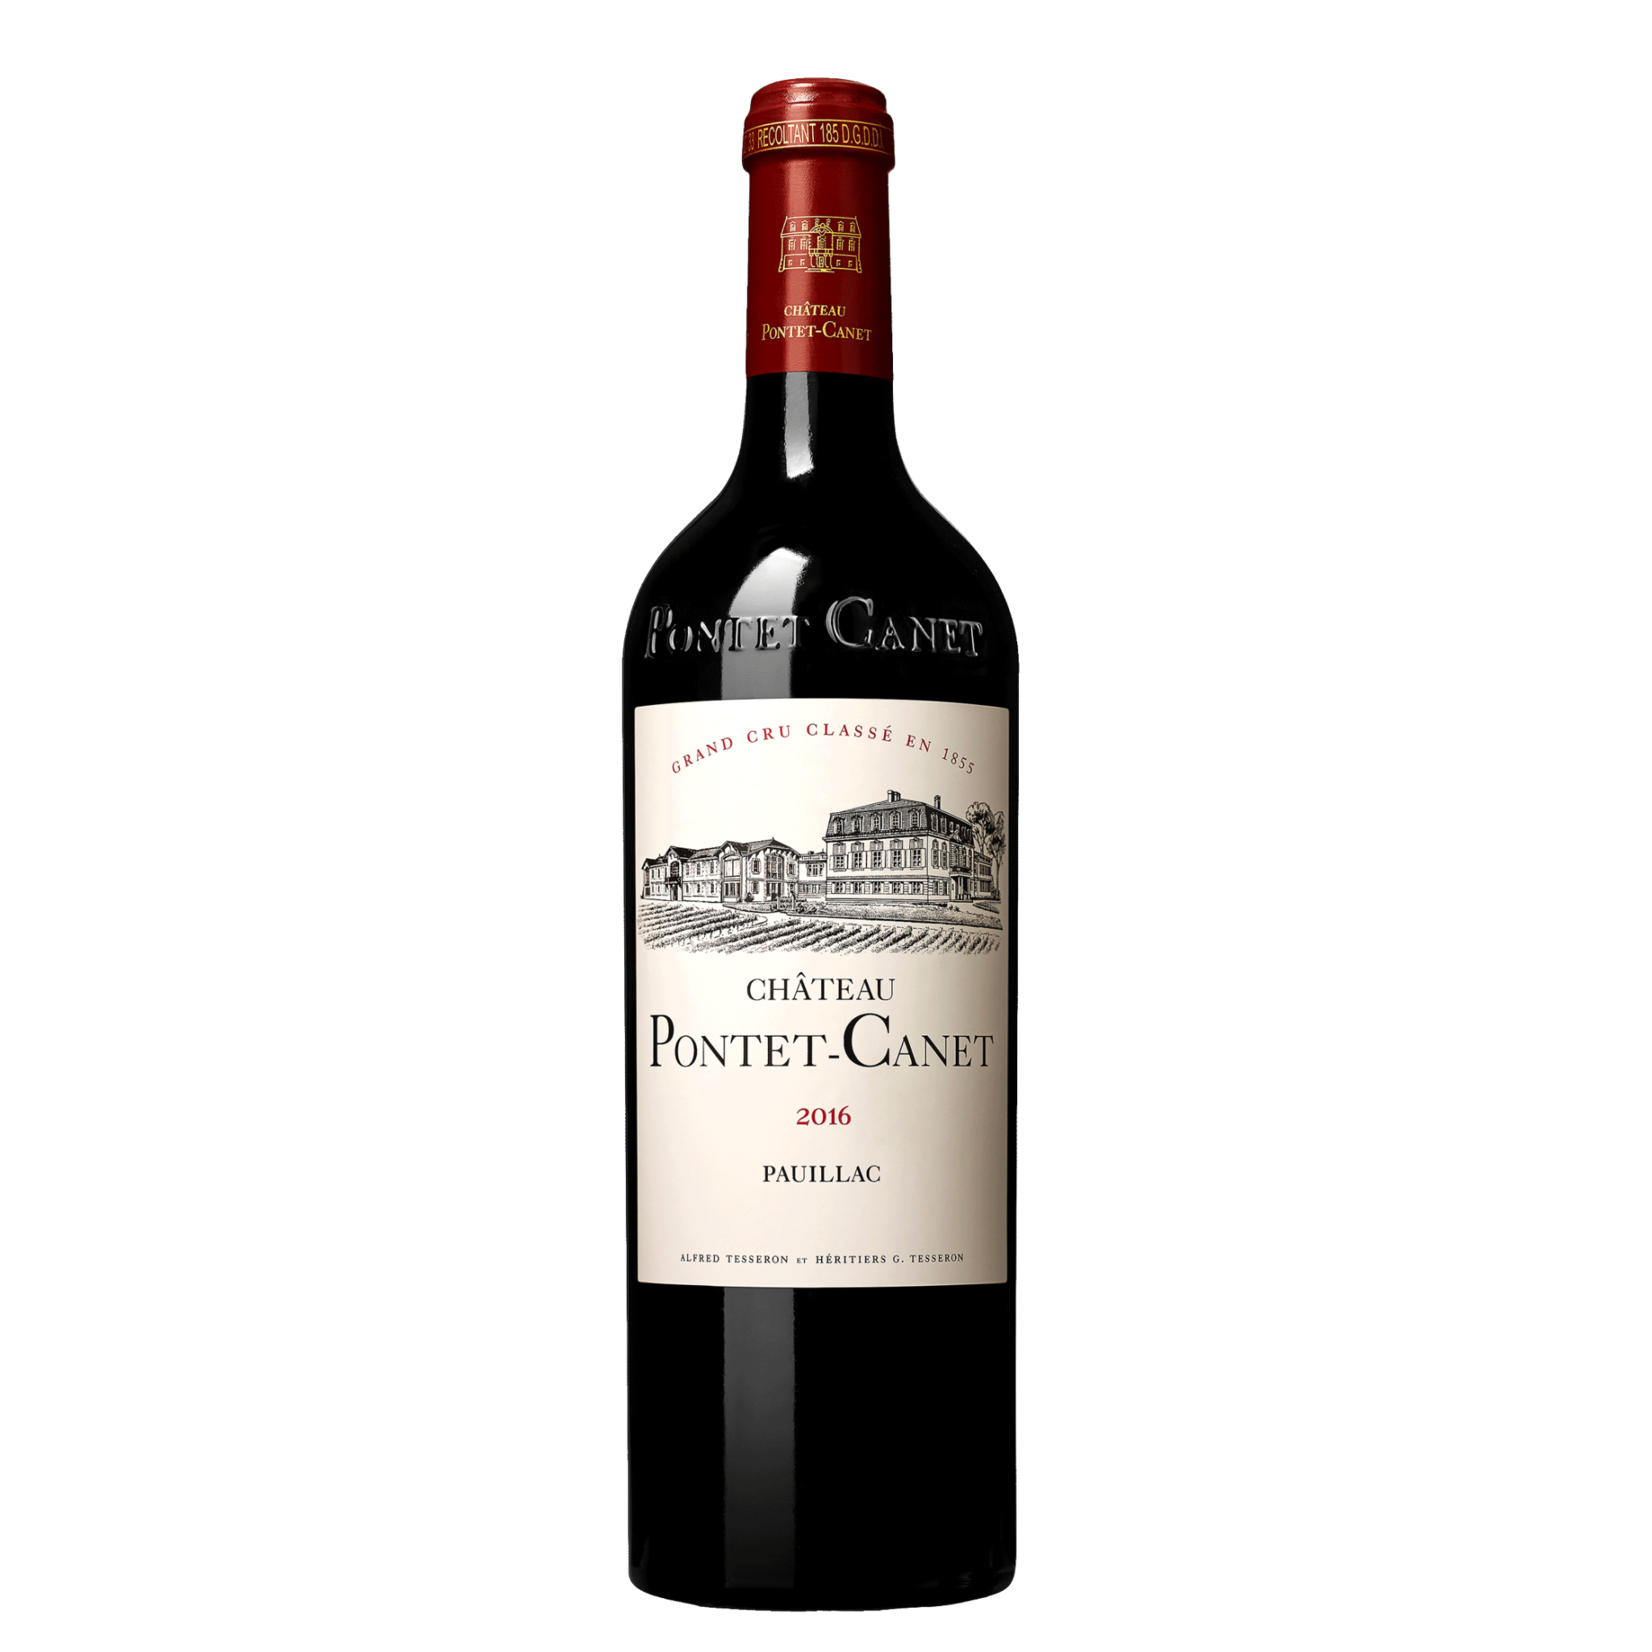 Wine Chateau Pontet Canet Pauillac 2016